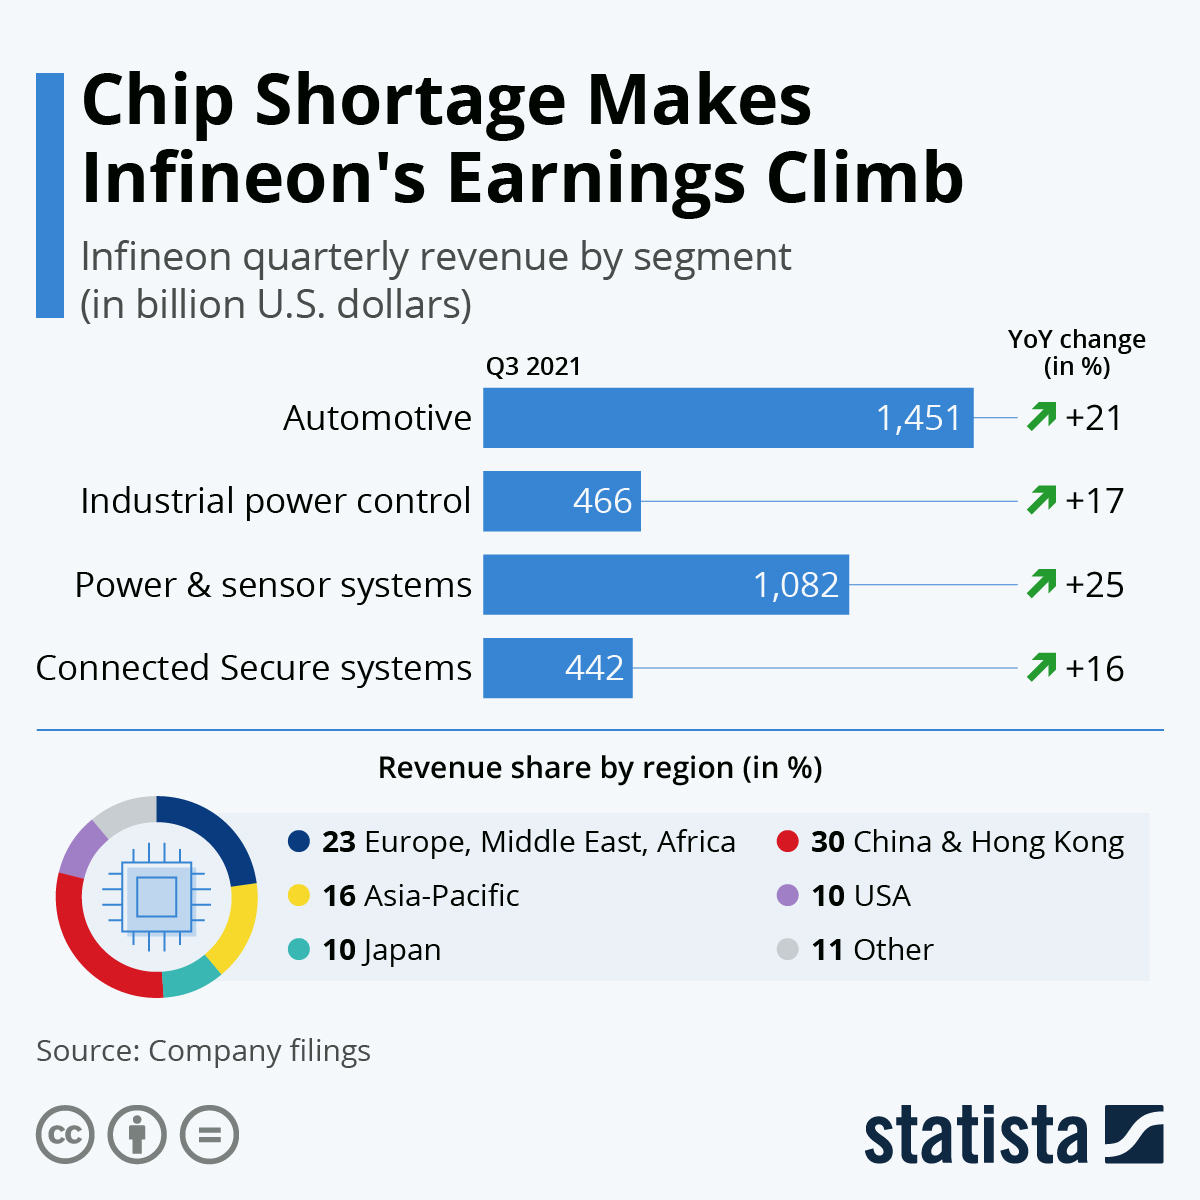 Chip Shortage Makes Infineon's Earnings Climb